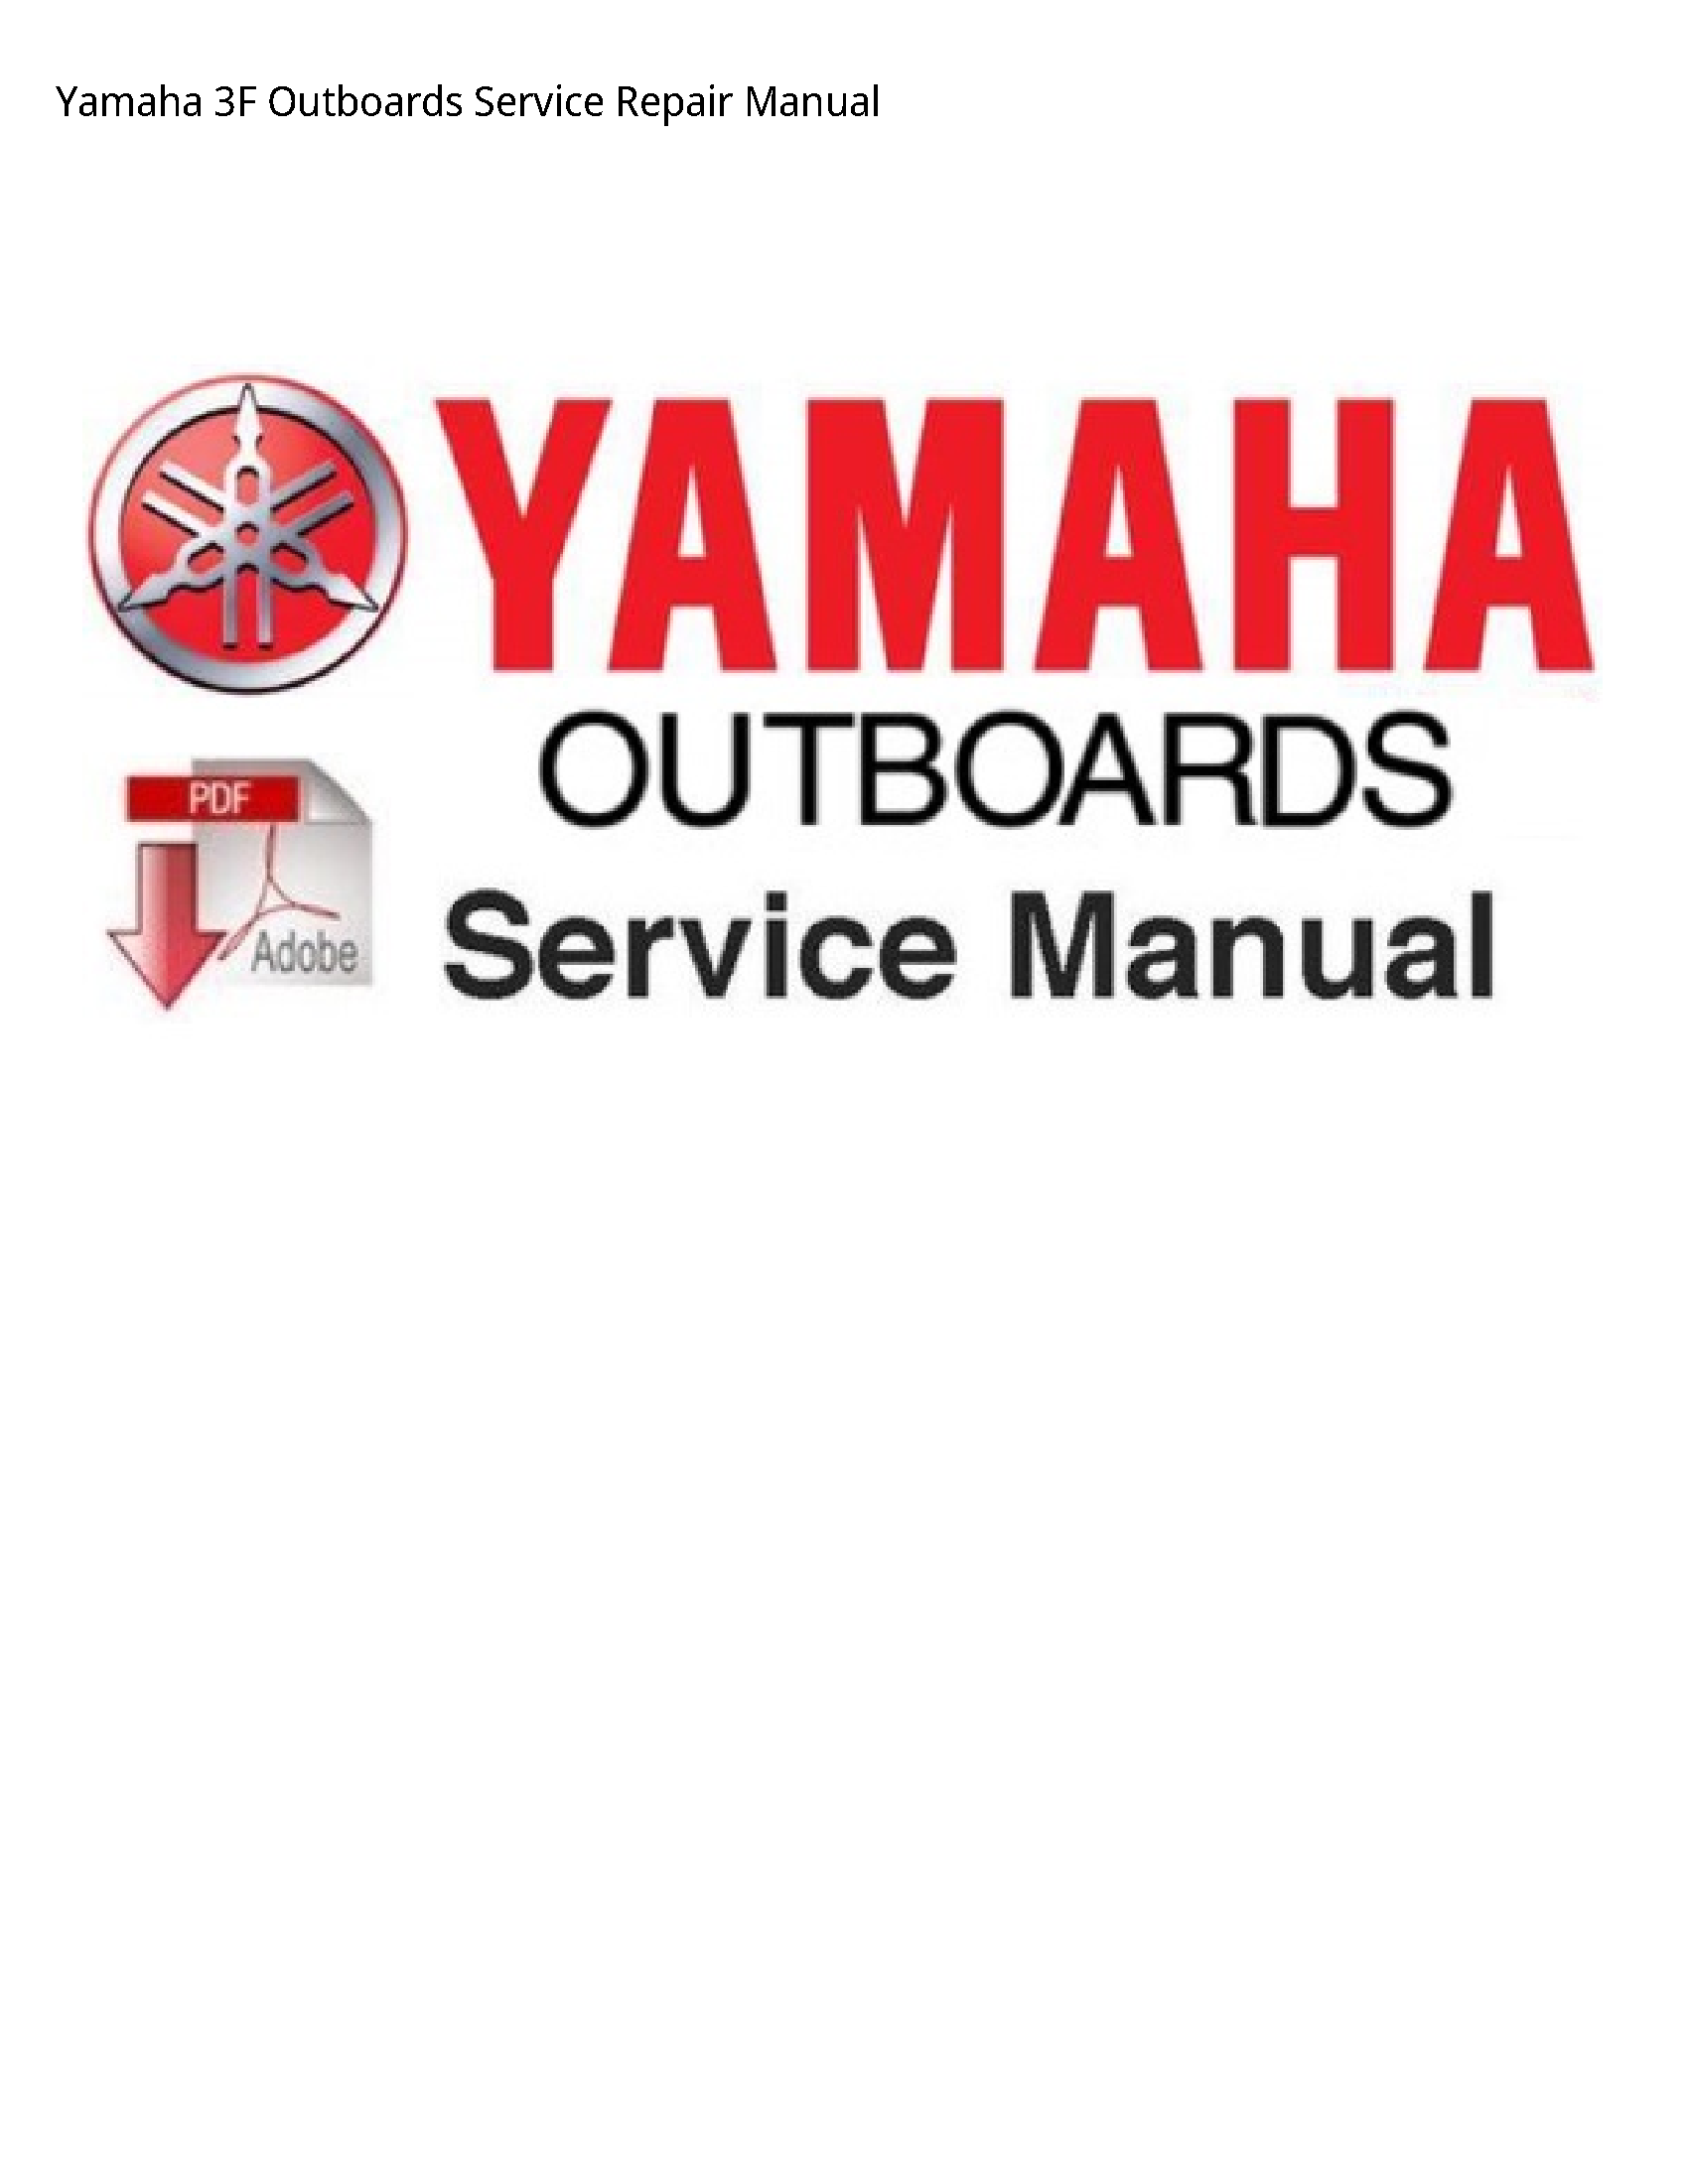 Yamaha 3F Outboards manual